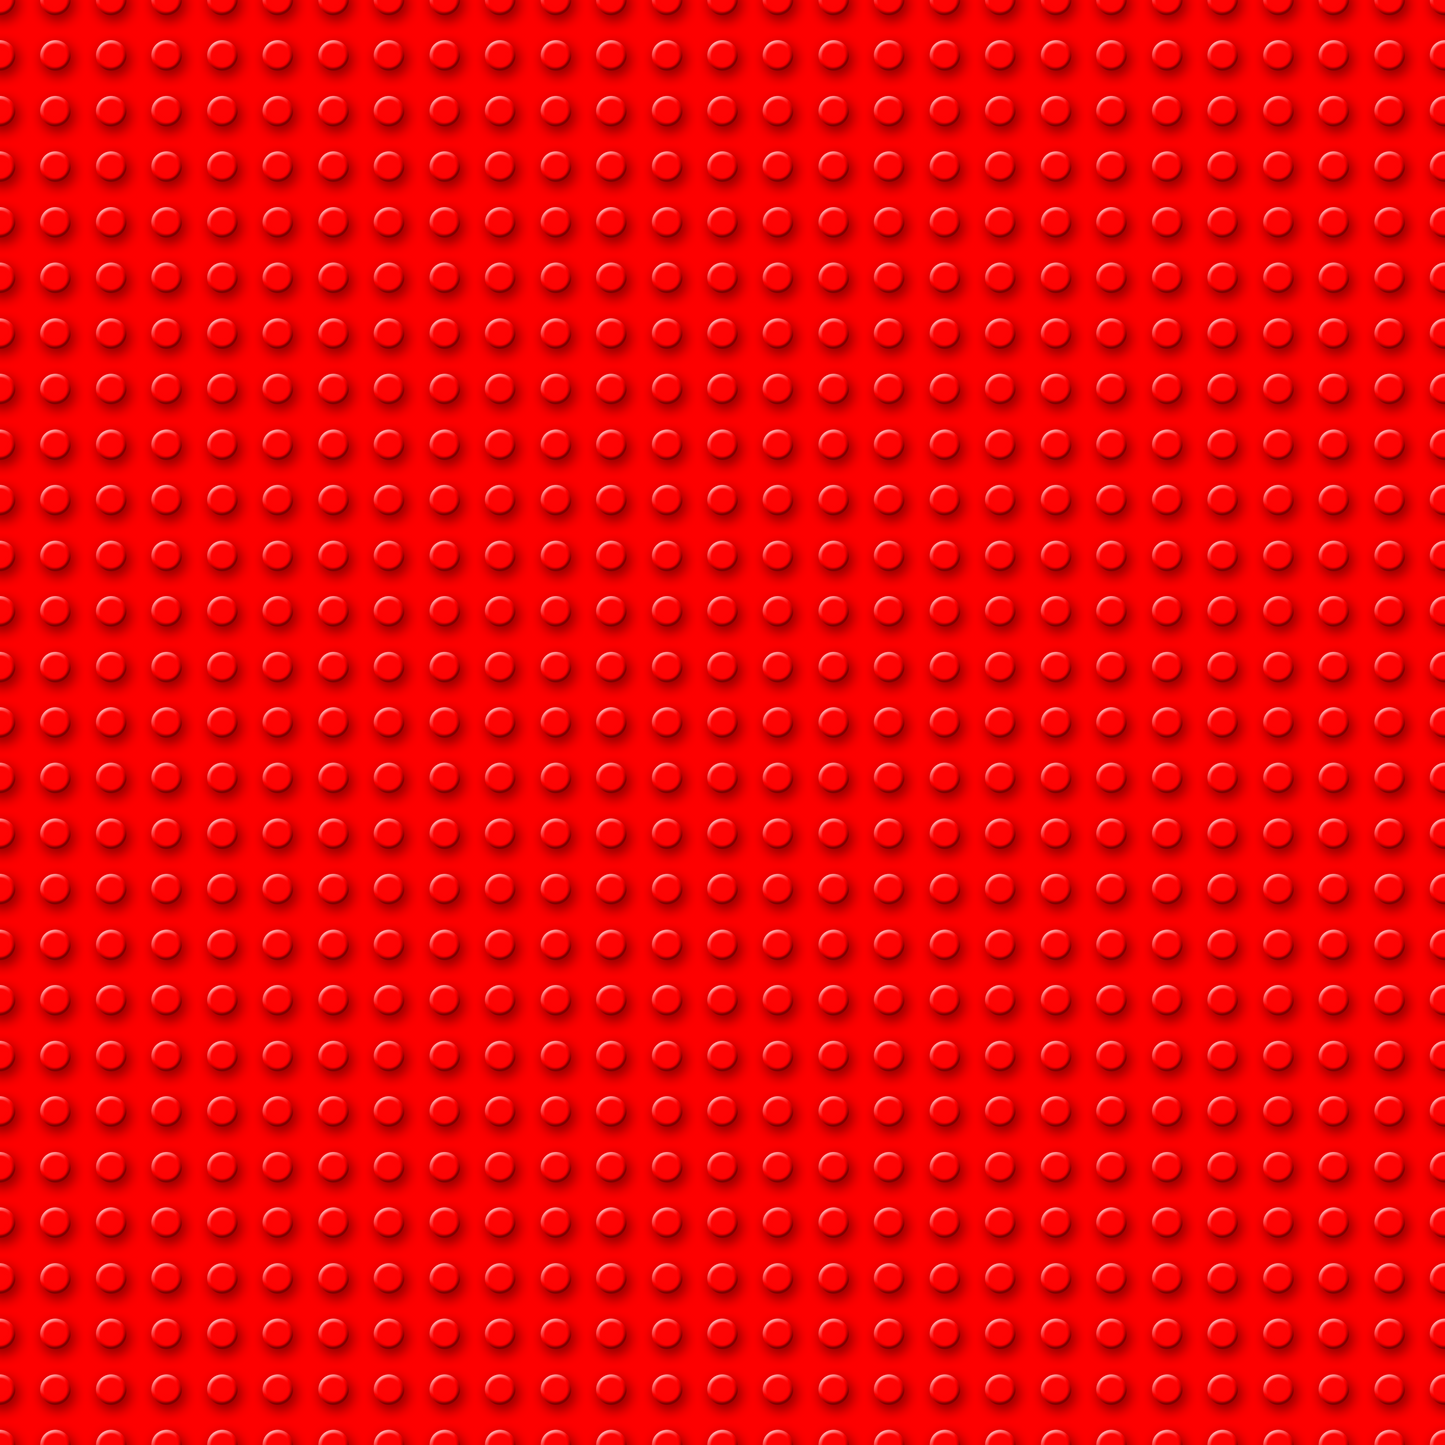 Building Blocks - Red - 005